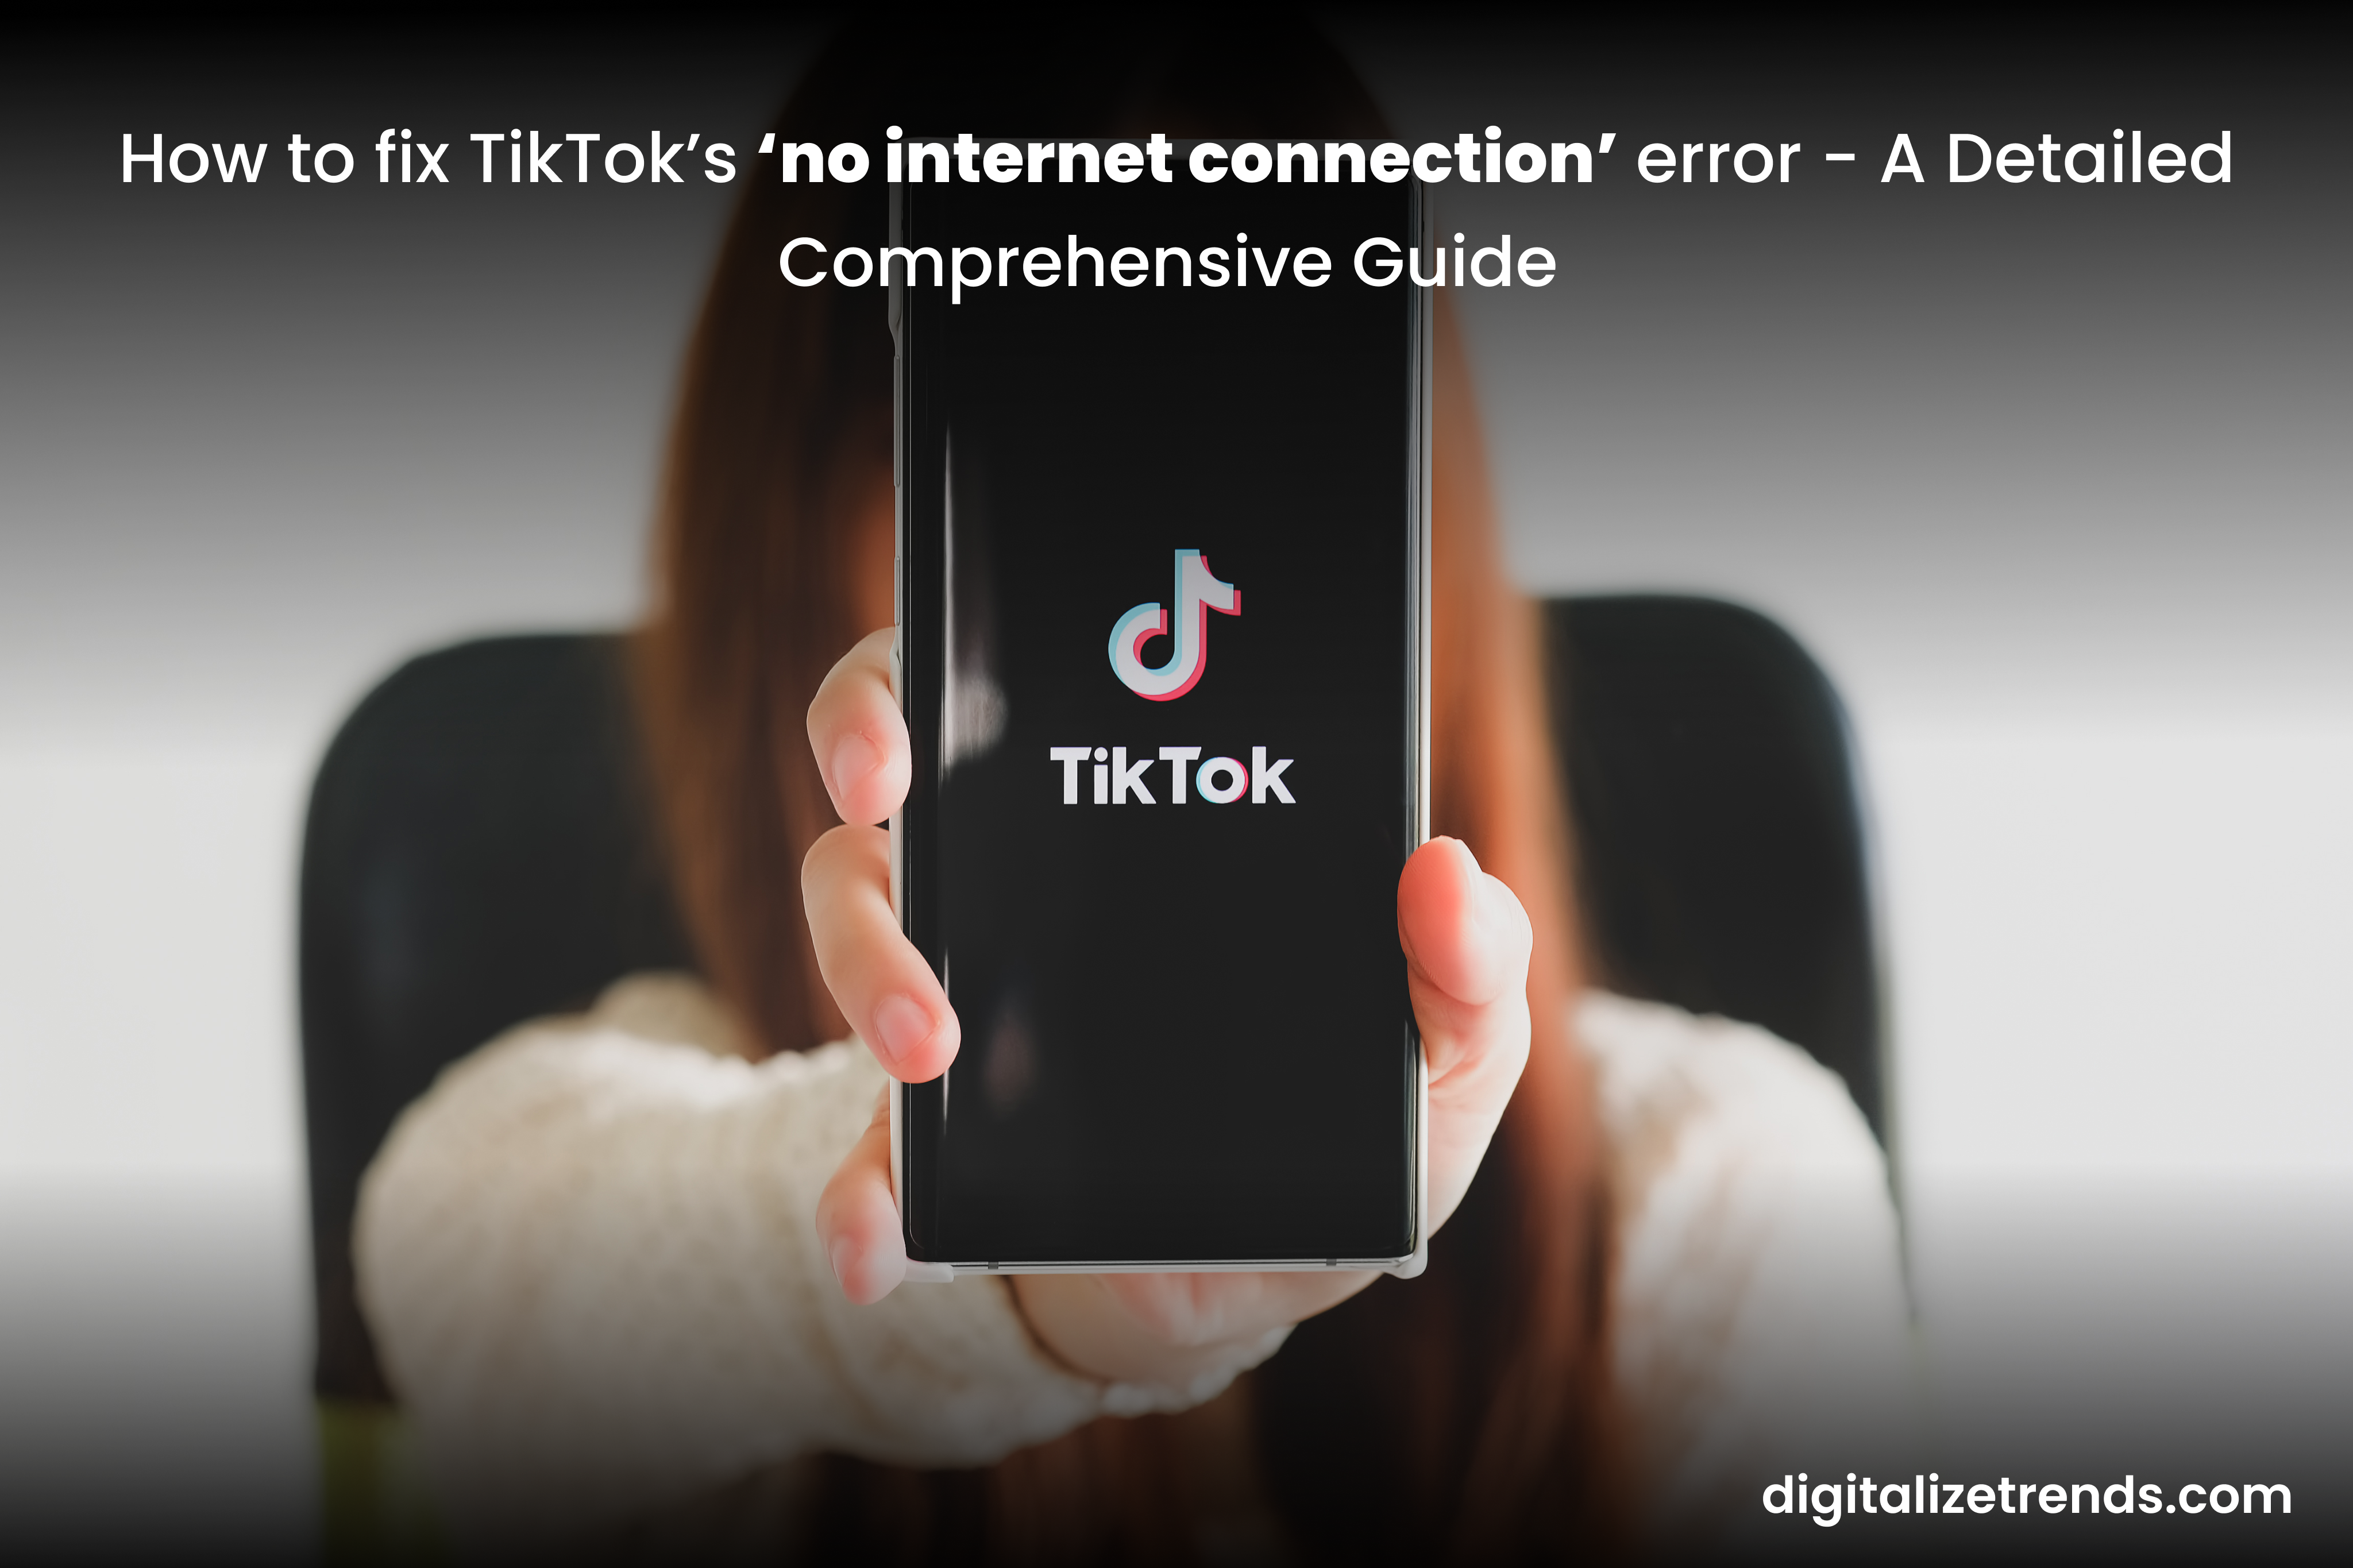 How to fix TikTok’s ‘no internet connection’ error - A Detailed Comprehensive Guide